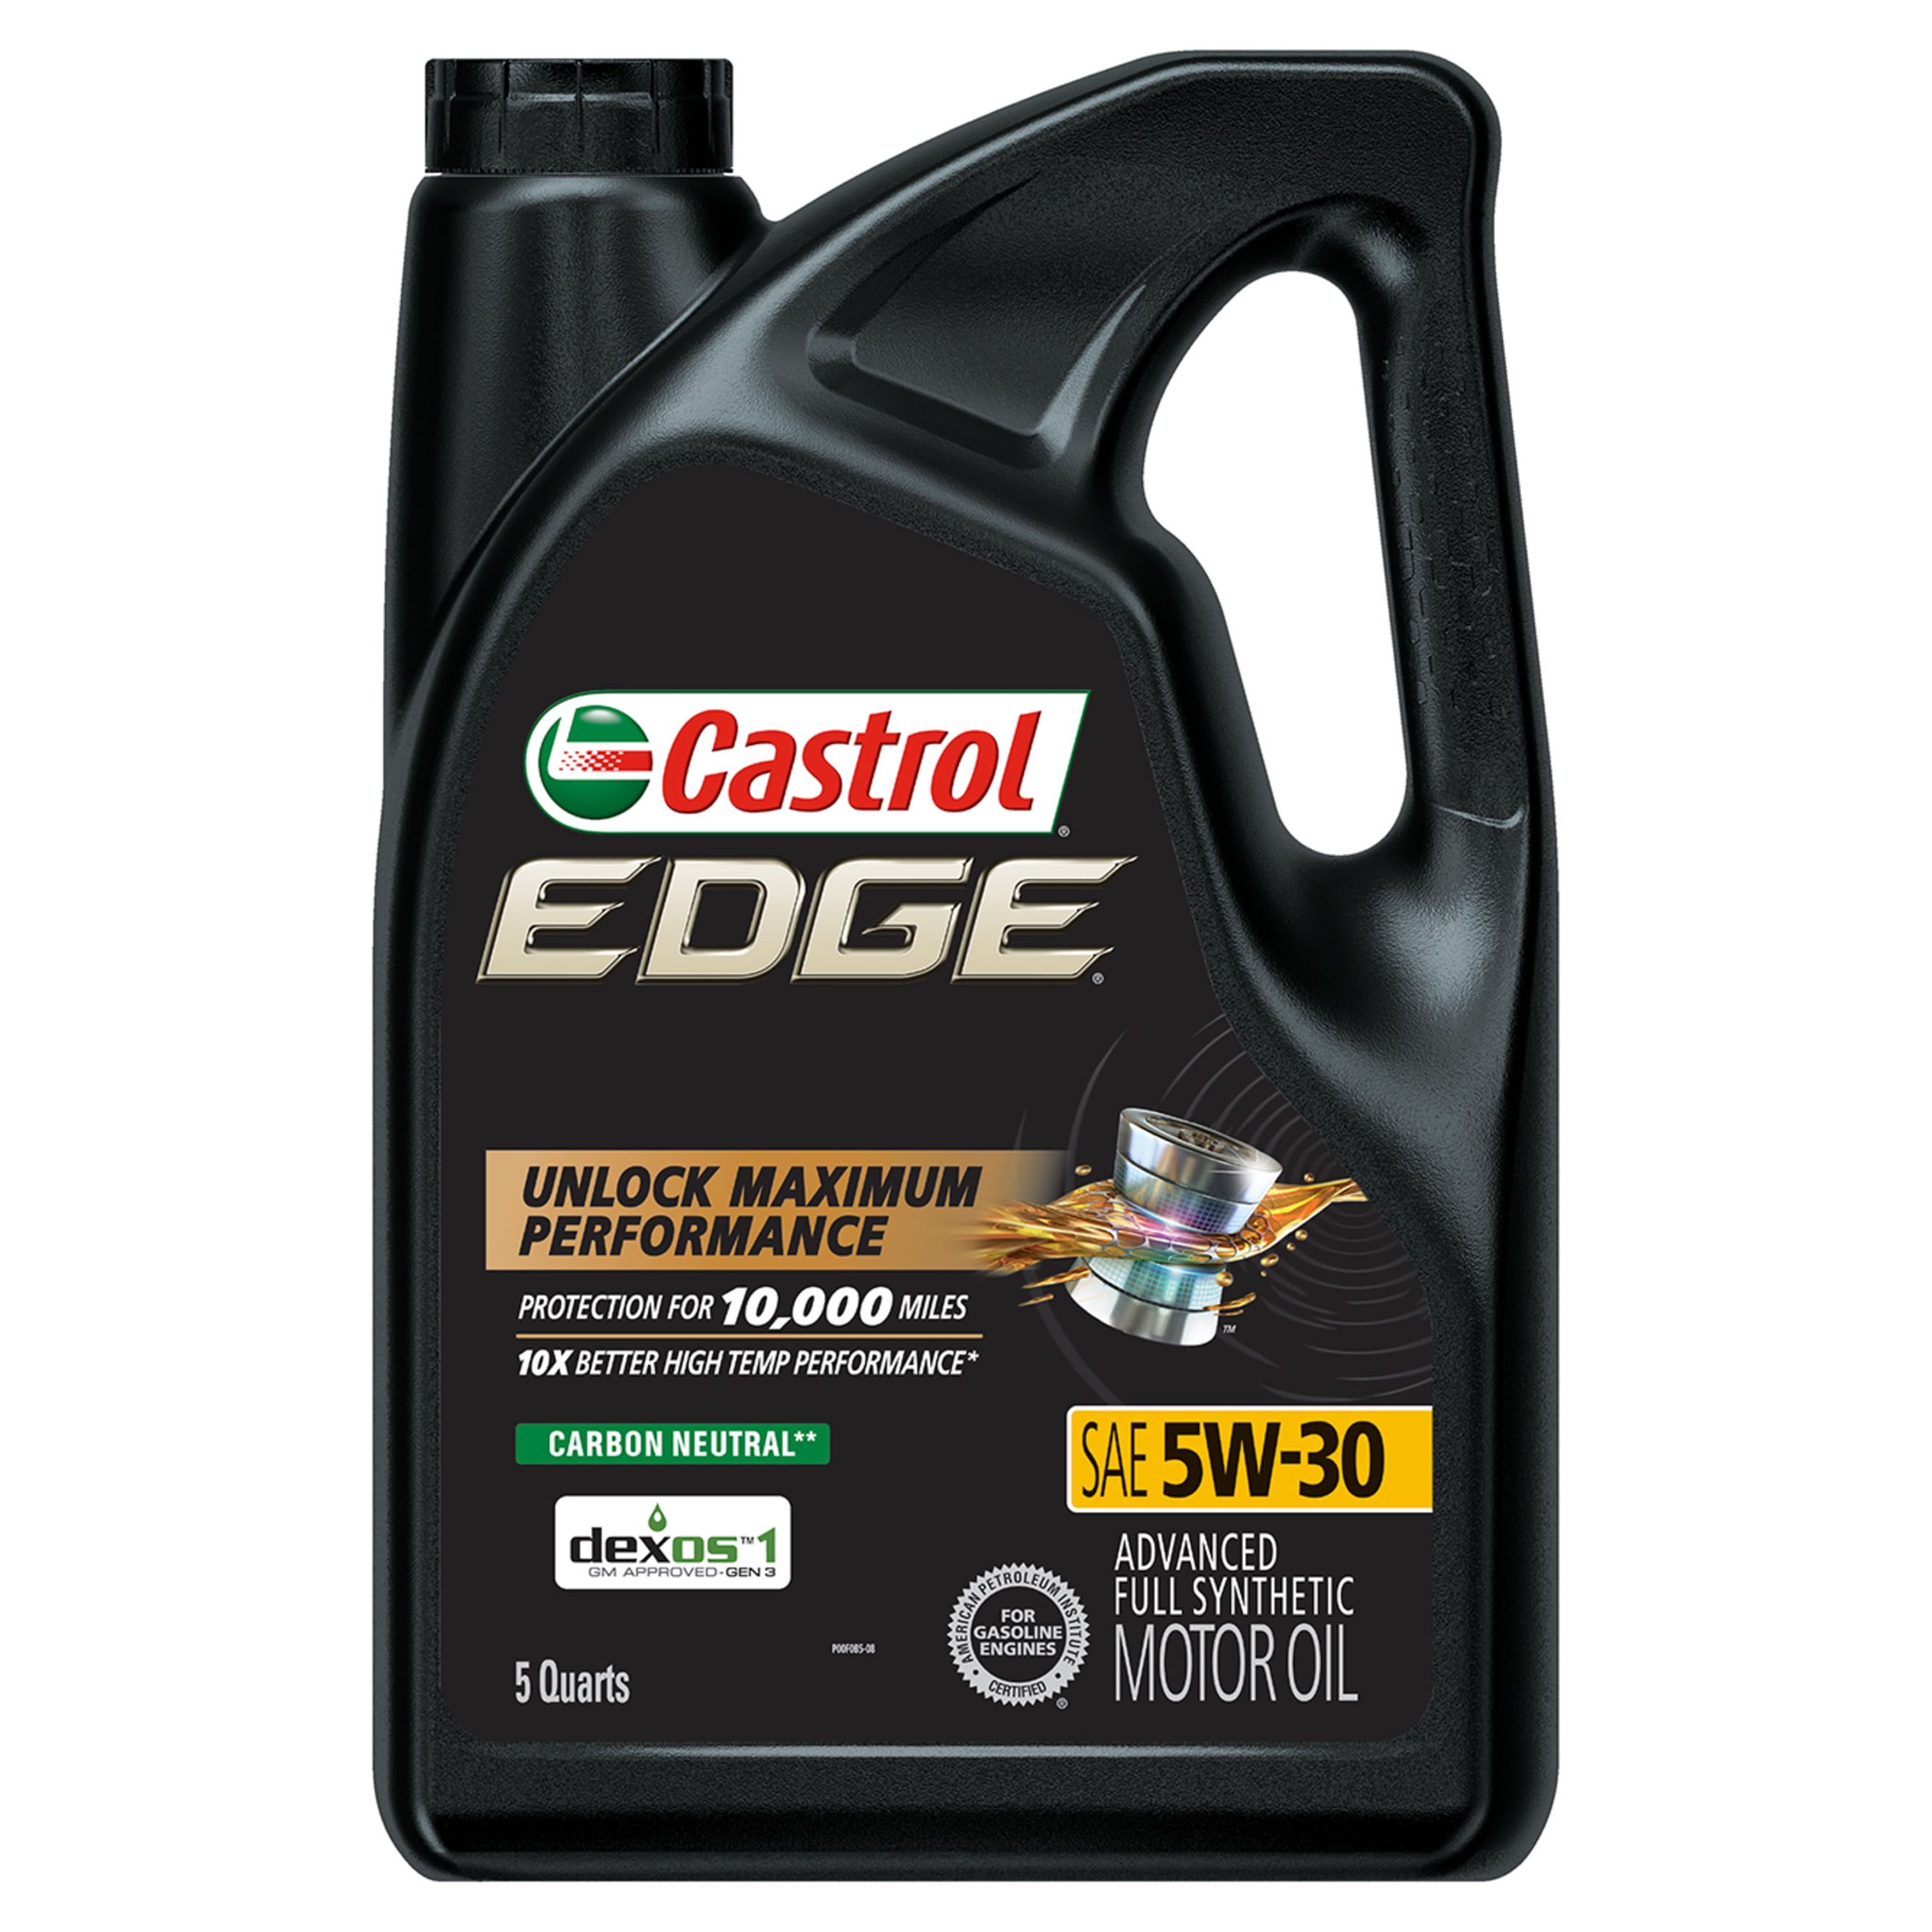 Castrol Edge 5W-30 Advanced Full Synthetic Motor Oil, 5 Quarts - image 3 of 13